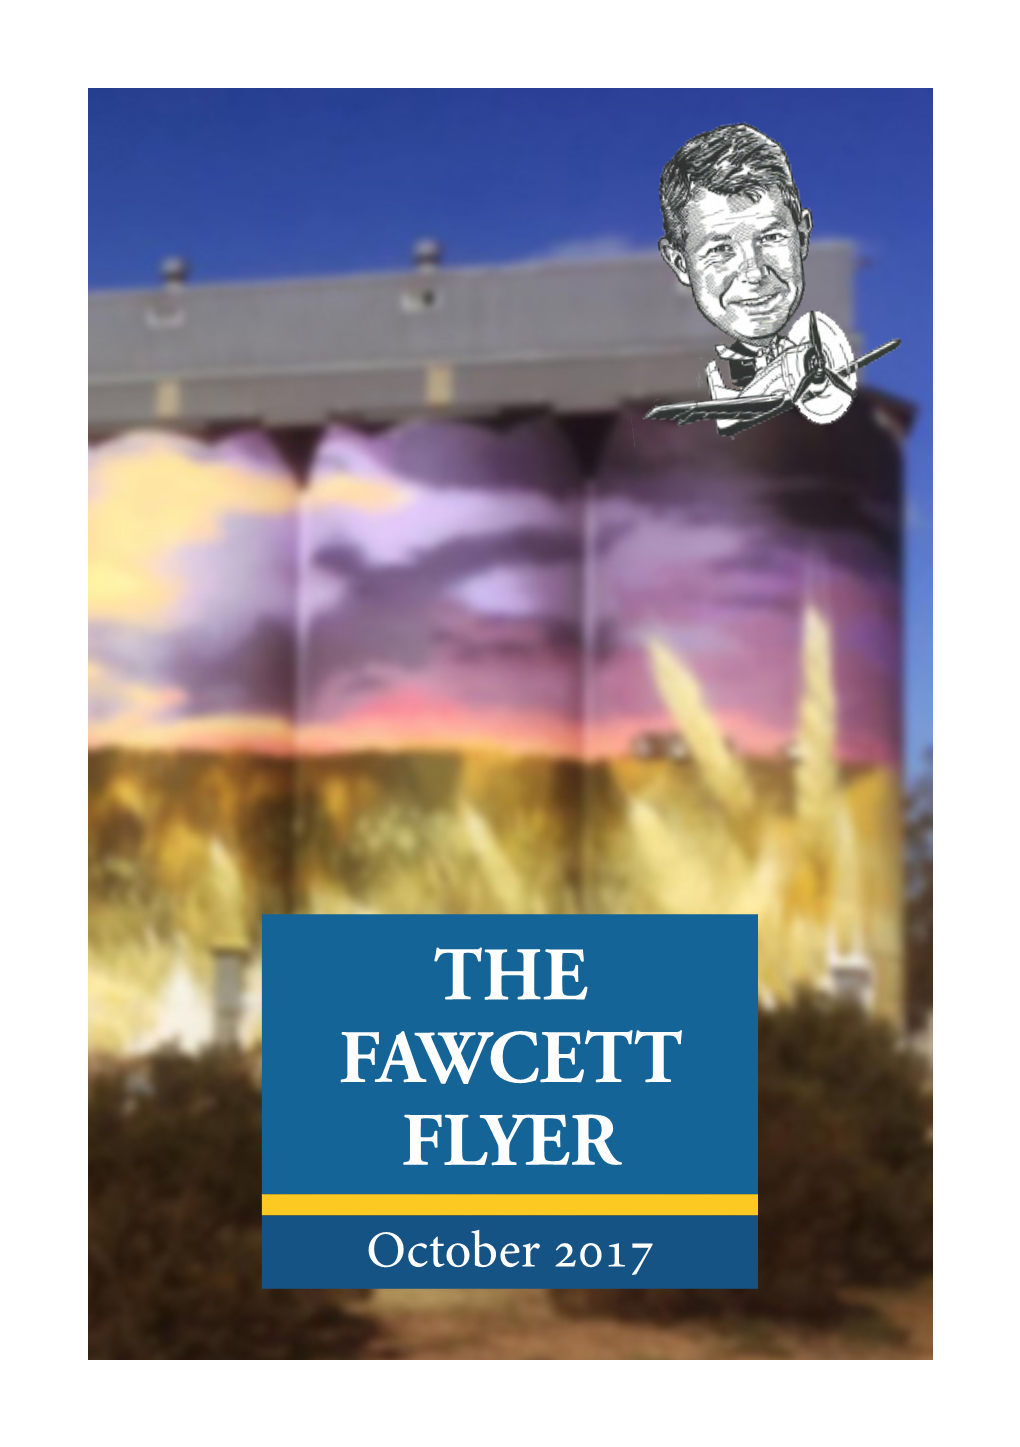 THE FAWCETT FLYER October 2017